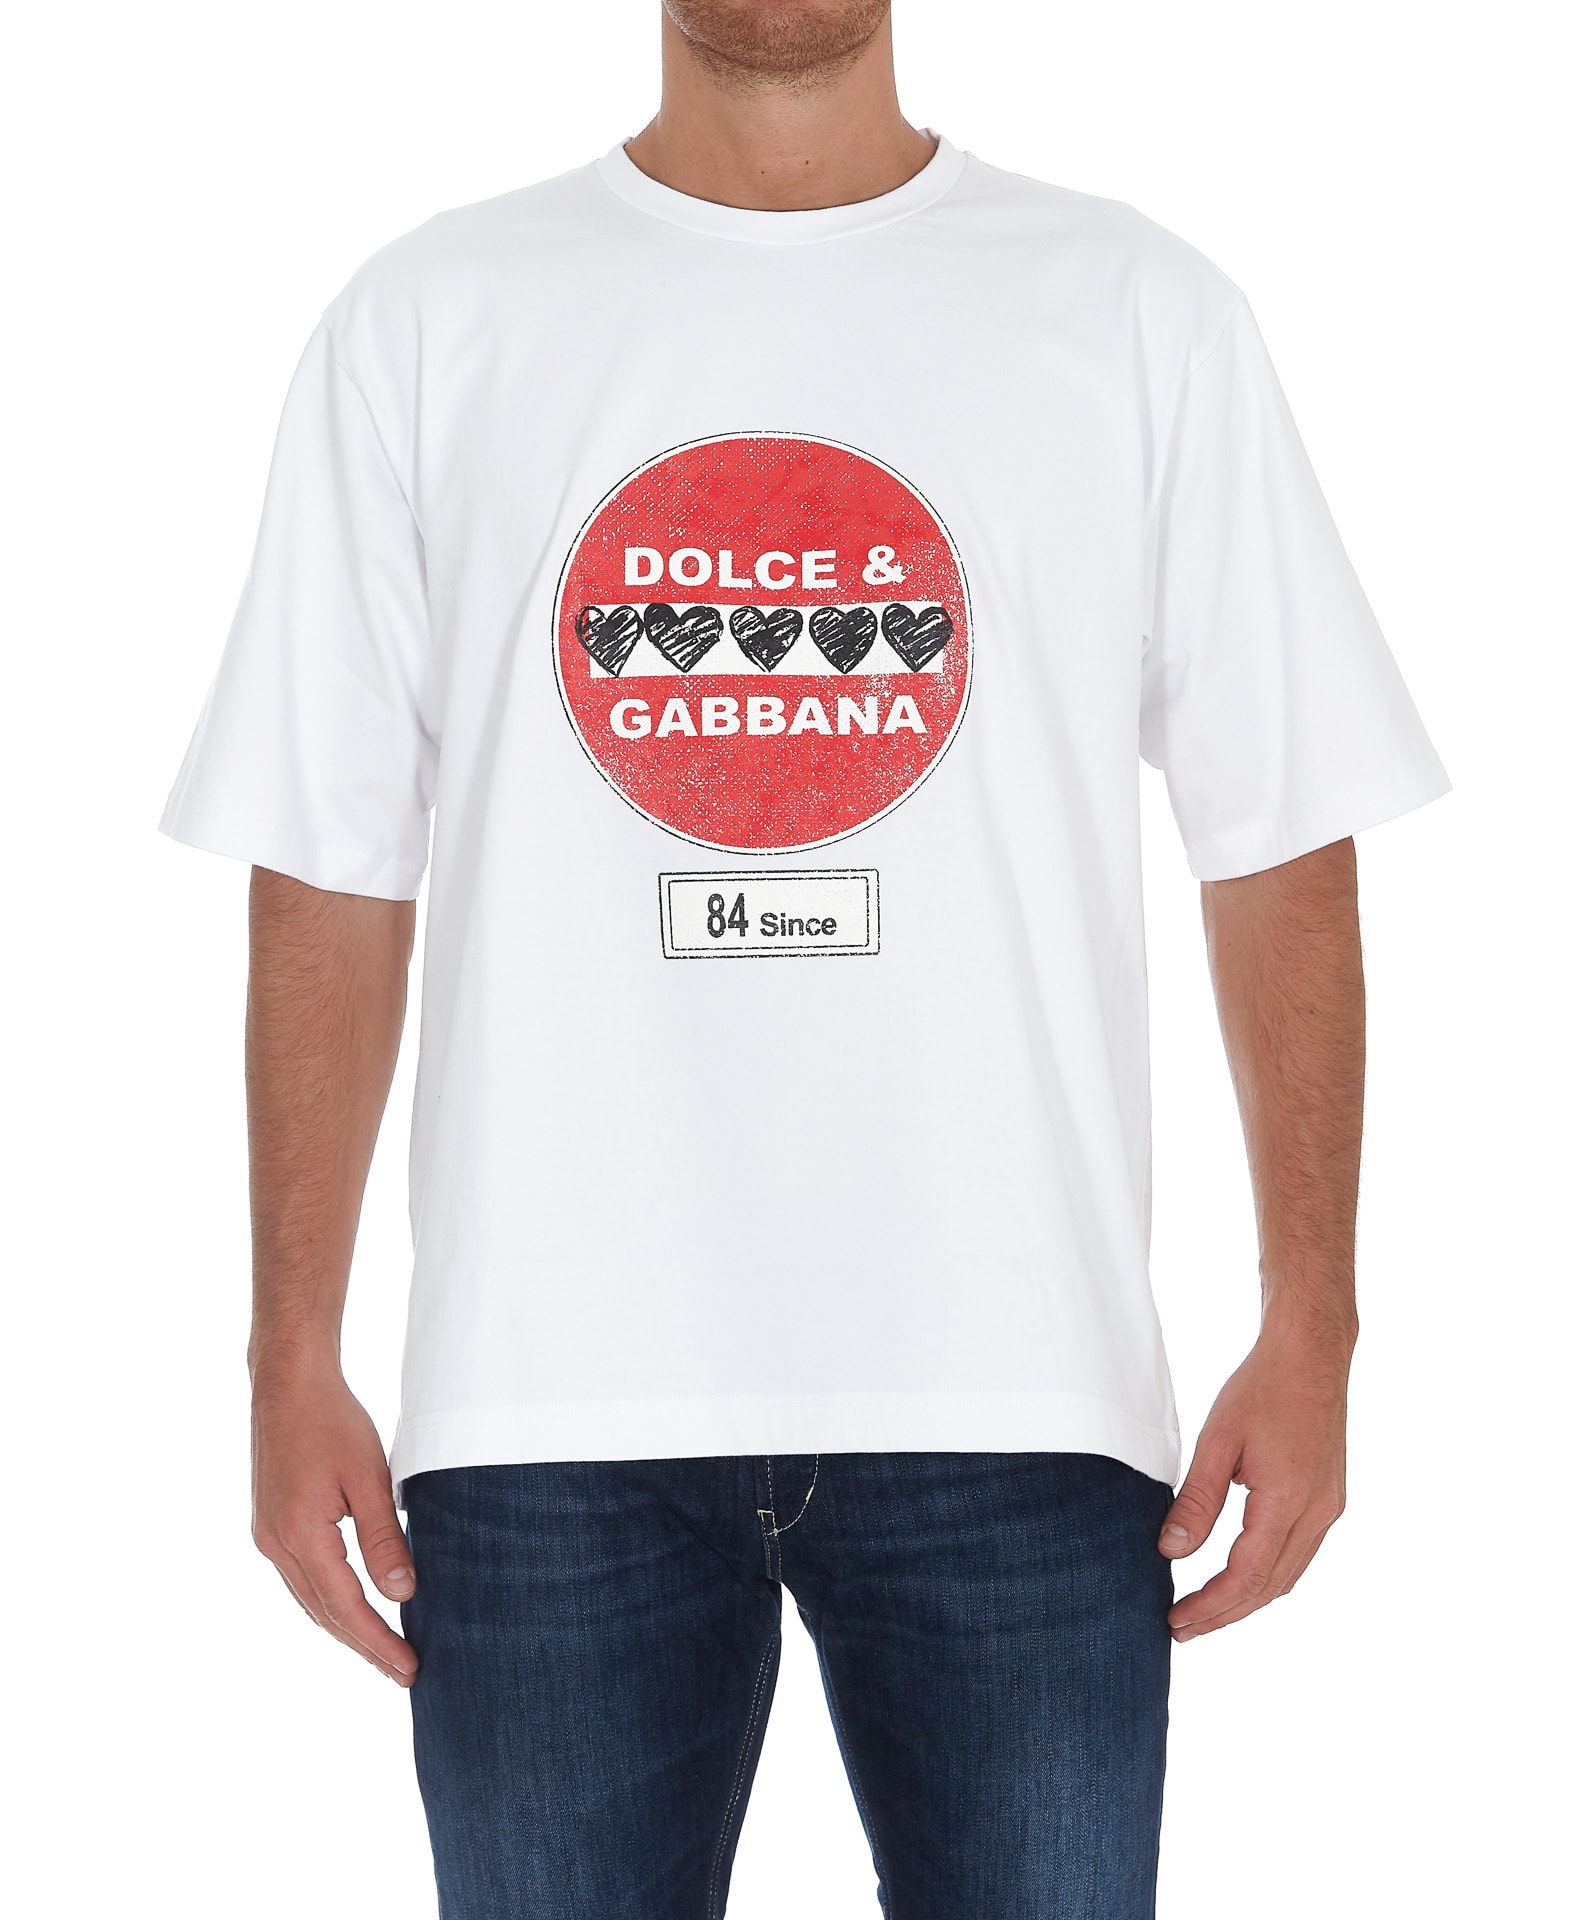 Dolce & Gabbana Road-sign Print T-shirt